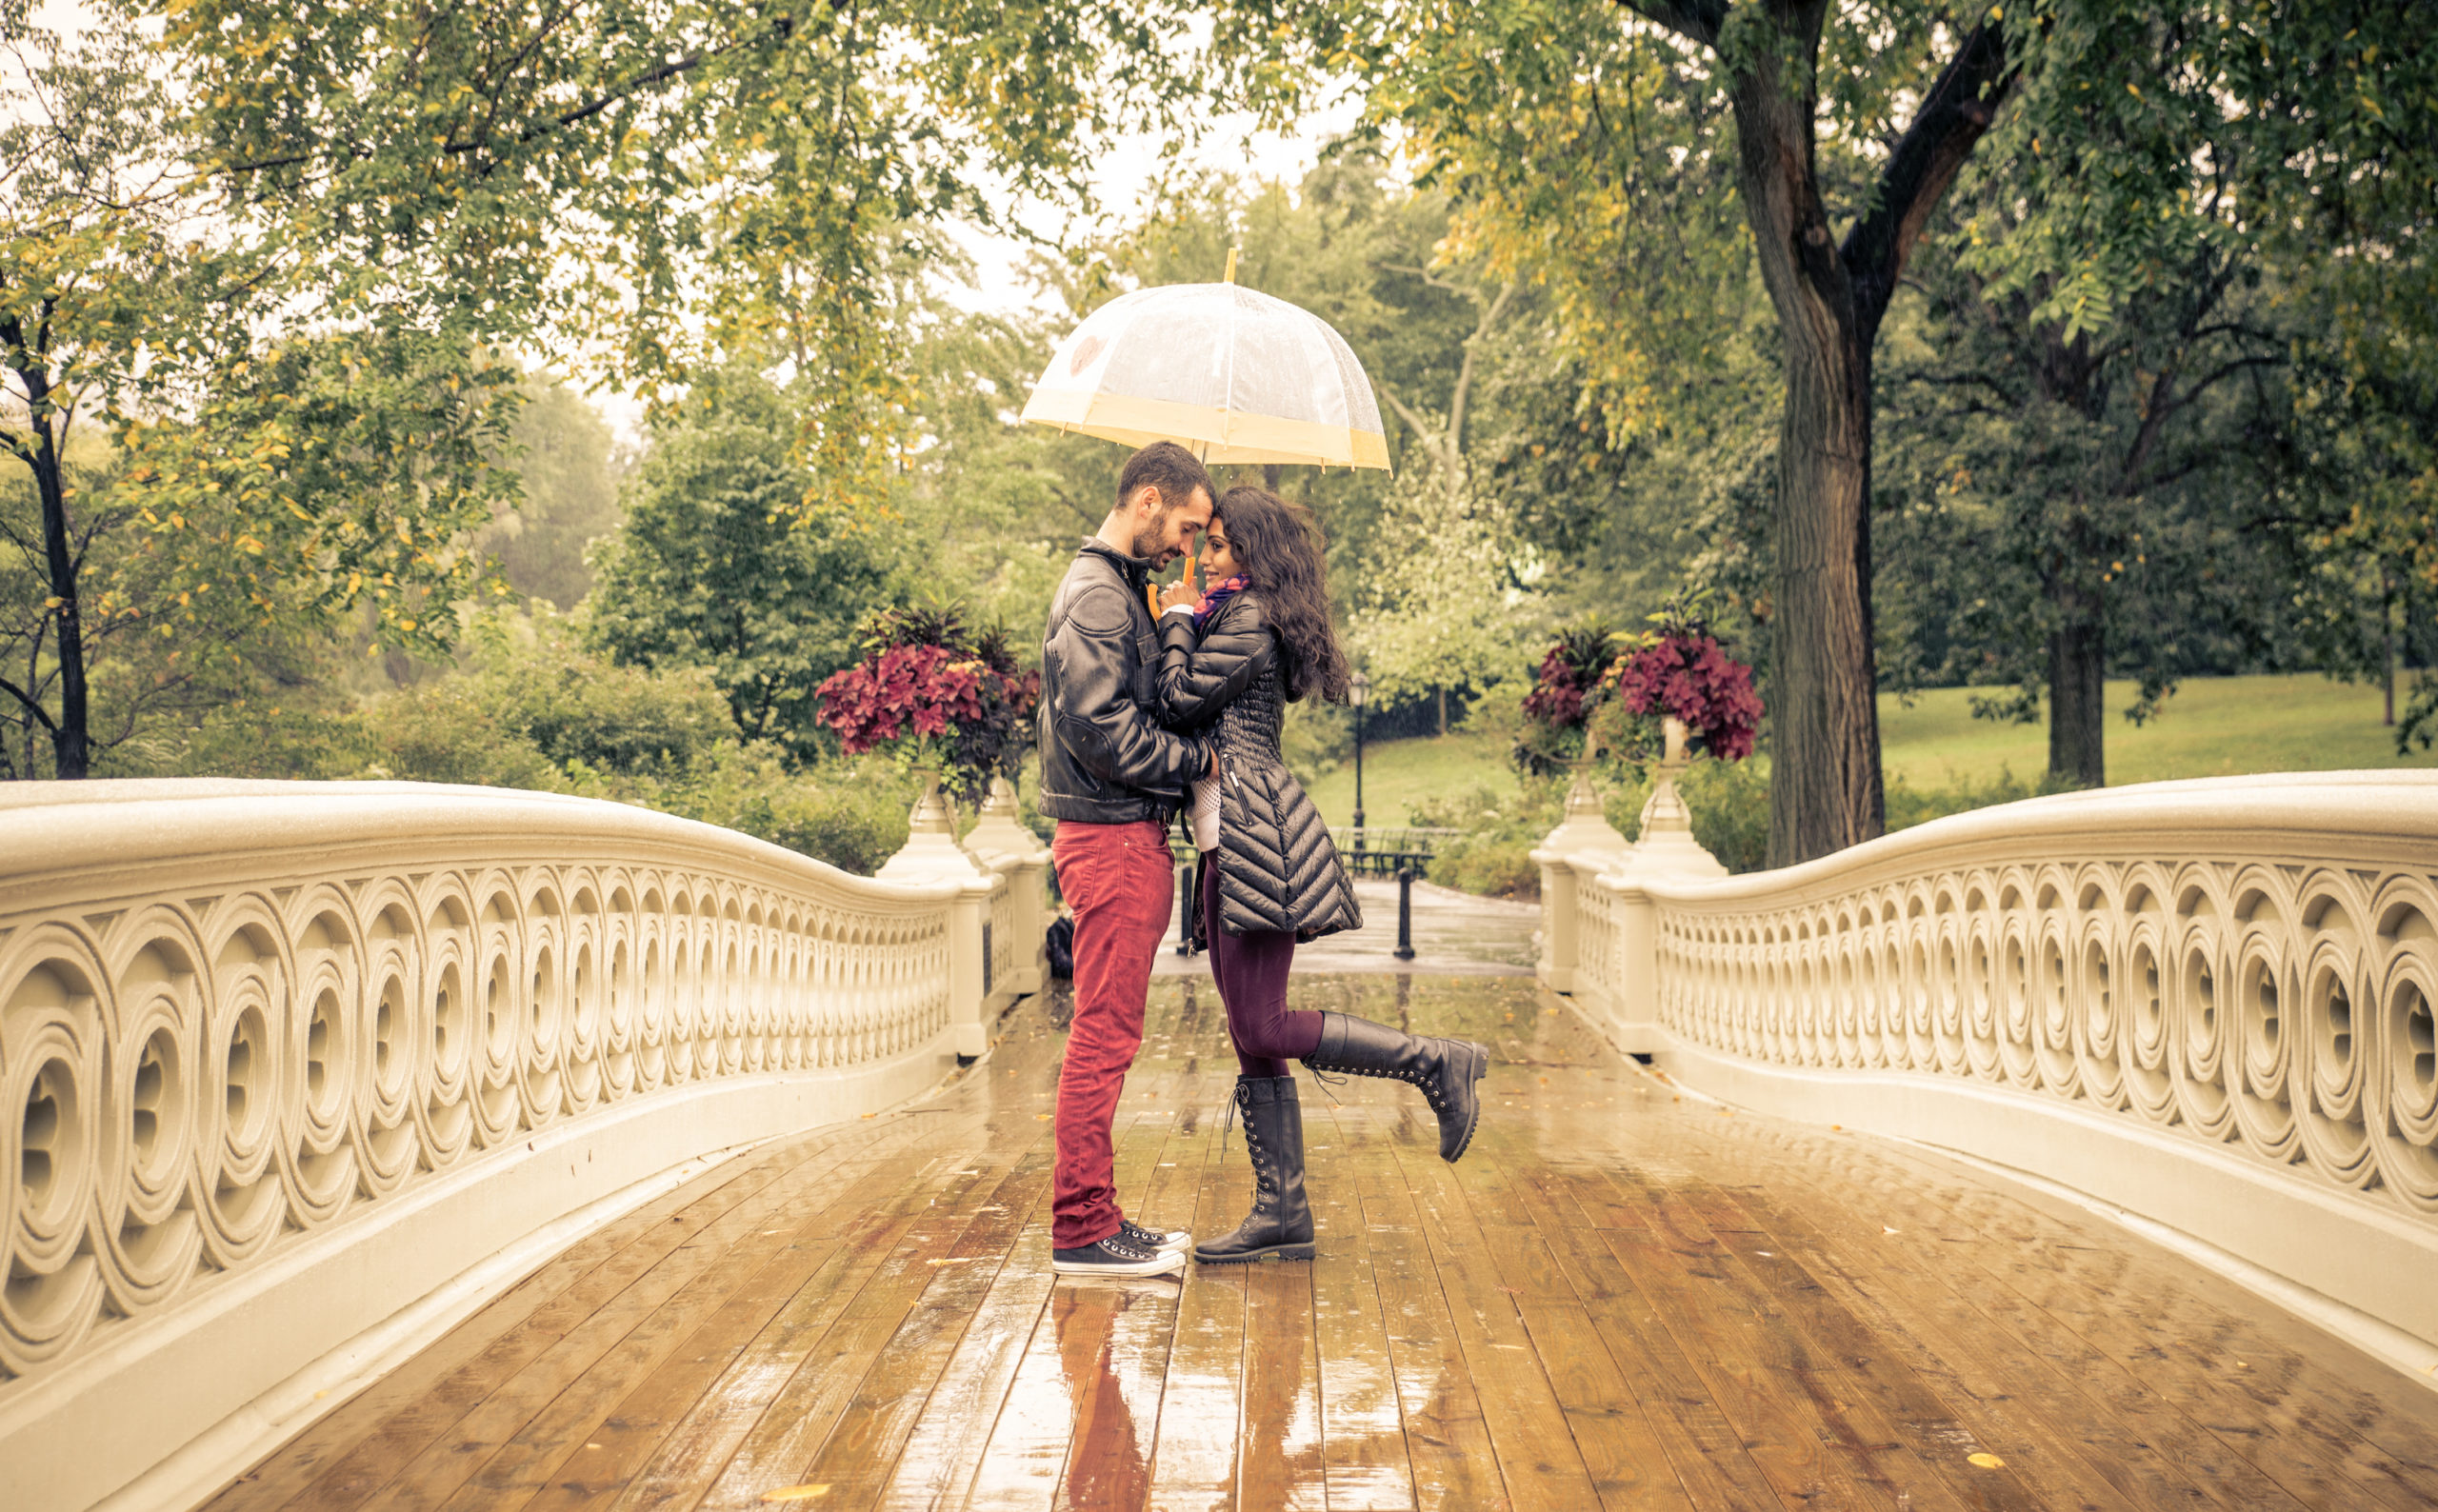 A romantic proposal on a bridge in the rain.